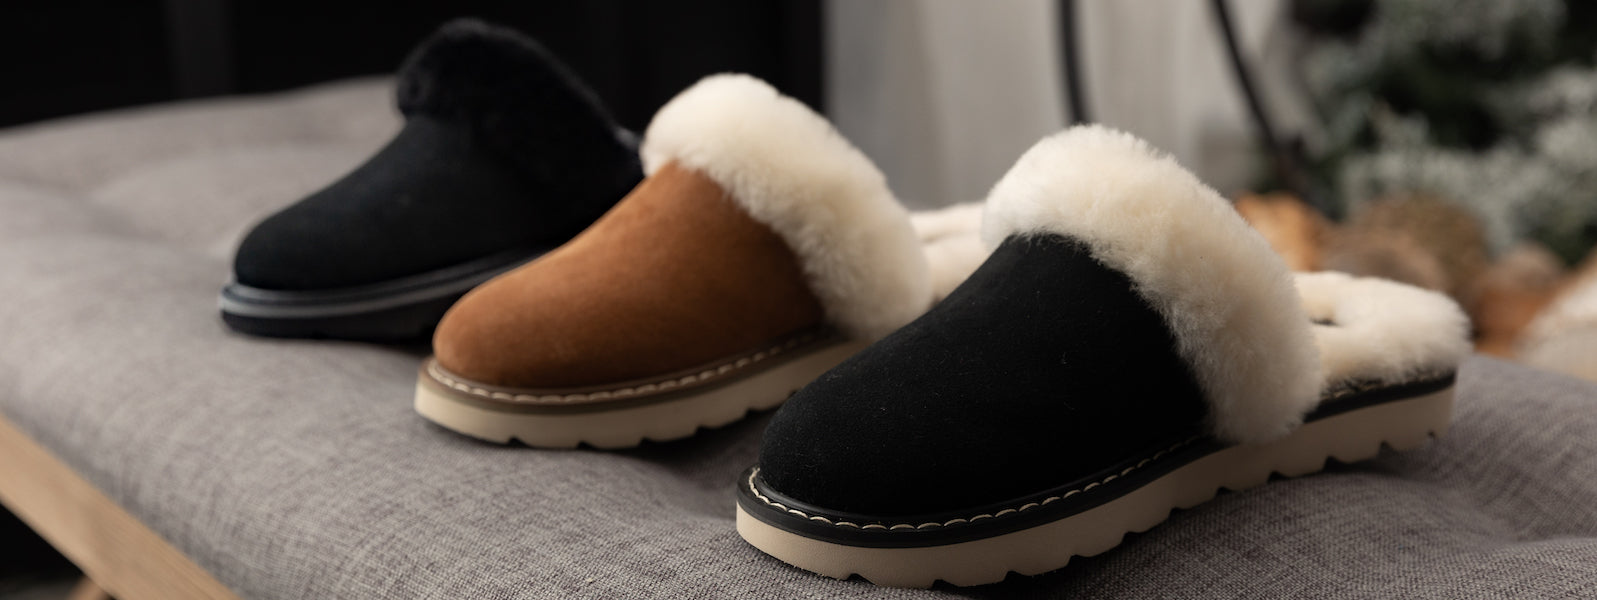 Cozy winter slippers for women